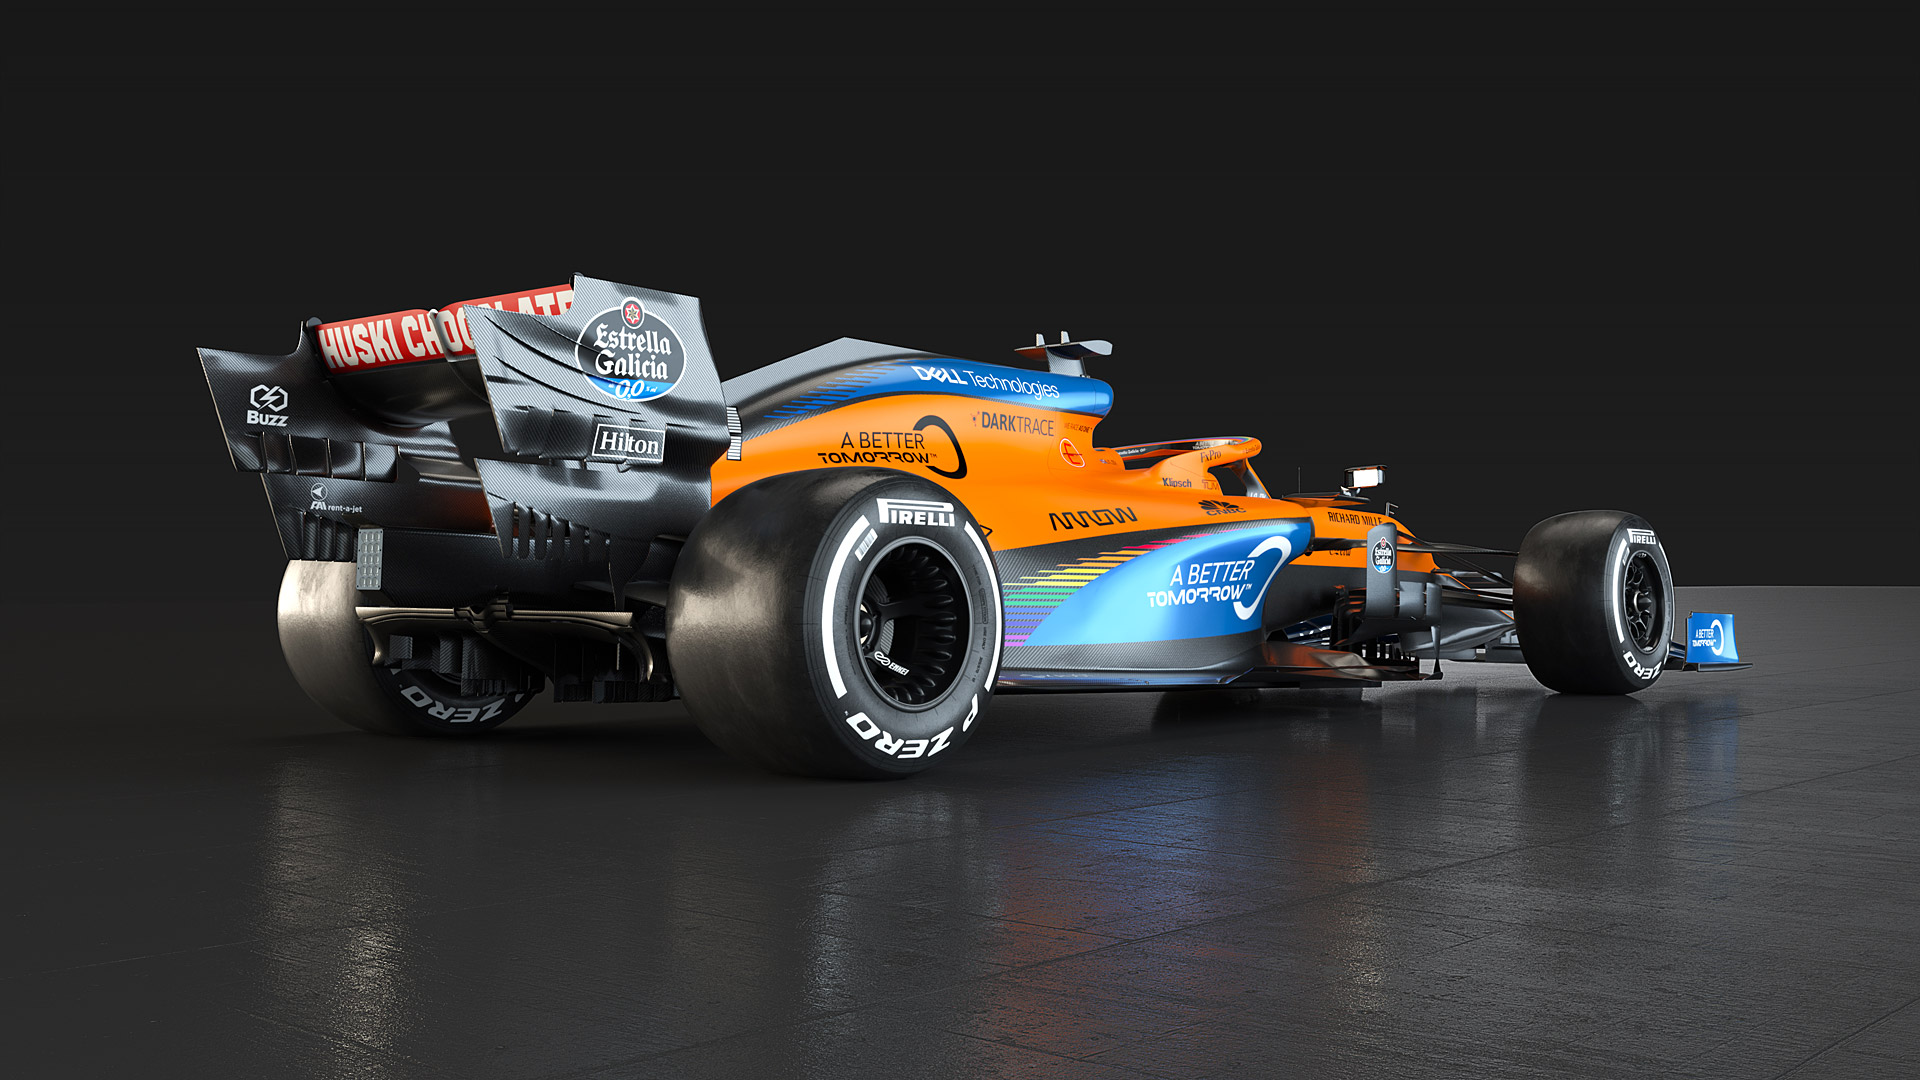  2020 McLaren MCL35 Wallpaper.